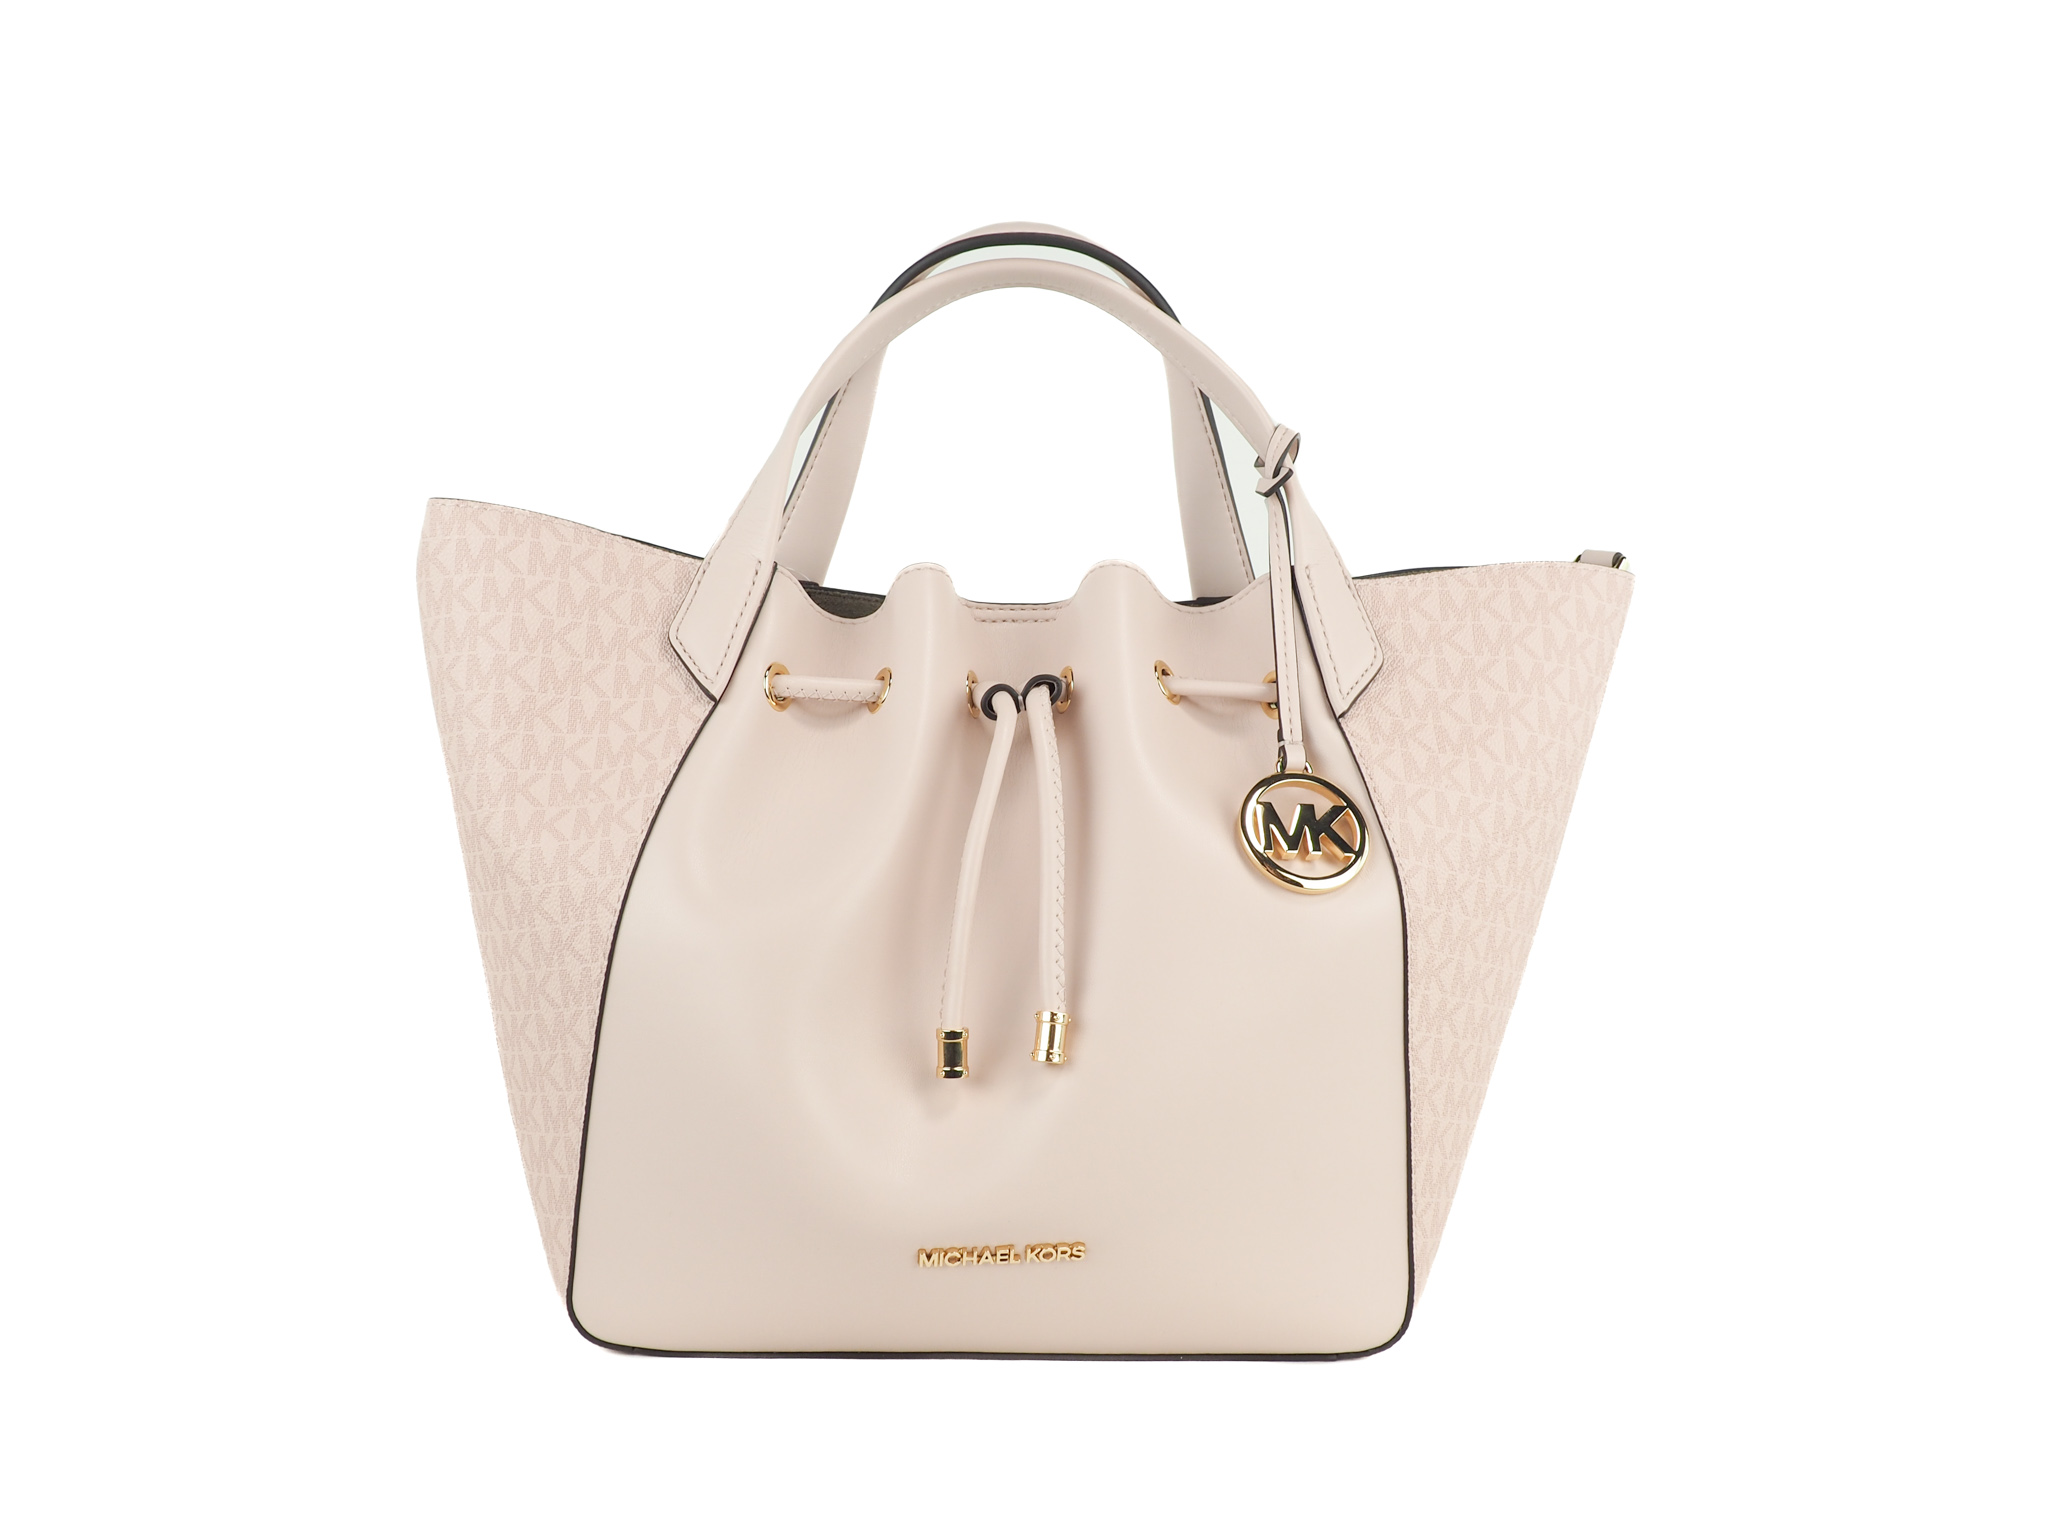 Phoebe Large Powder Blush PVC Leather Drawstring Grab Bag Handbag BY Michael Kors - Bags available at DOYUF